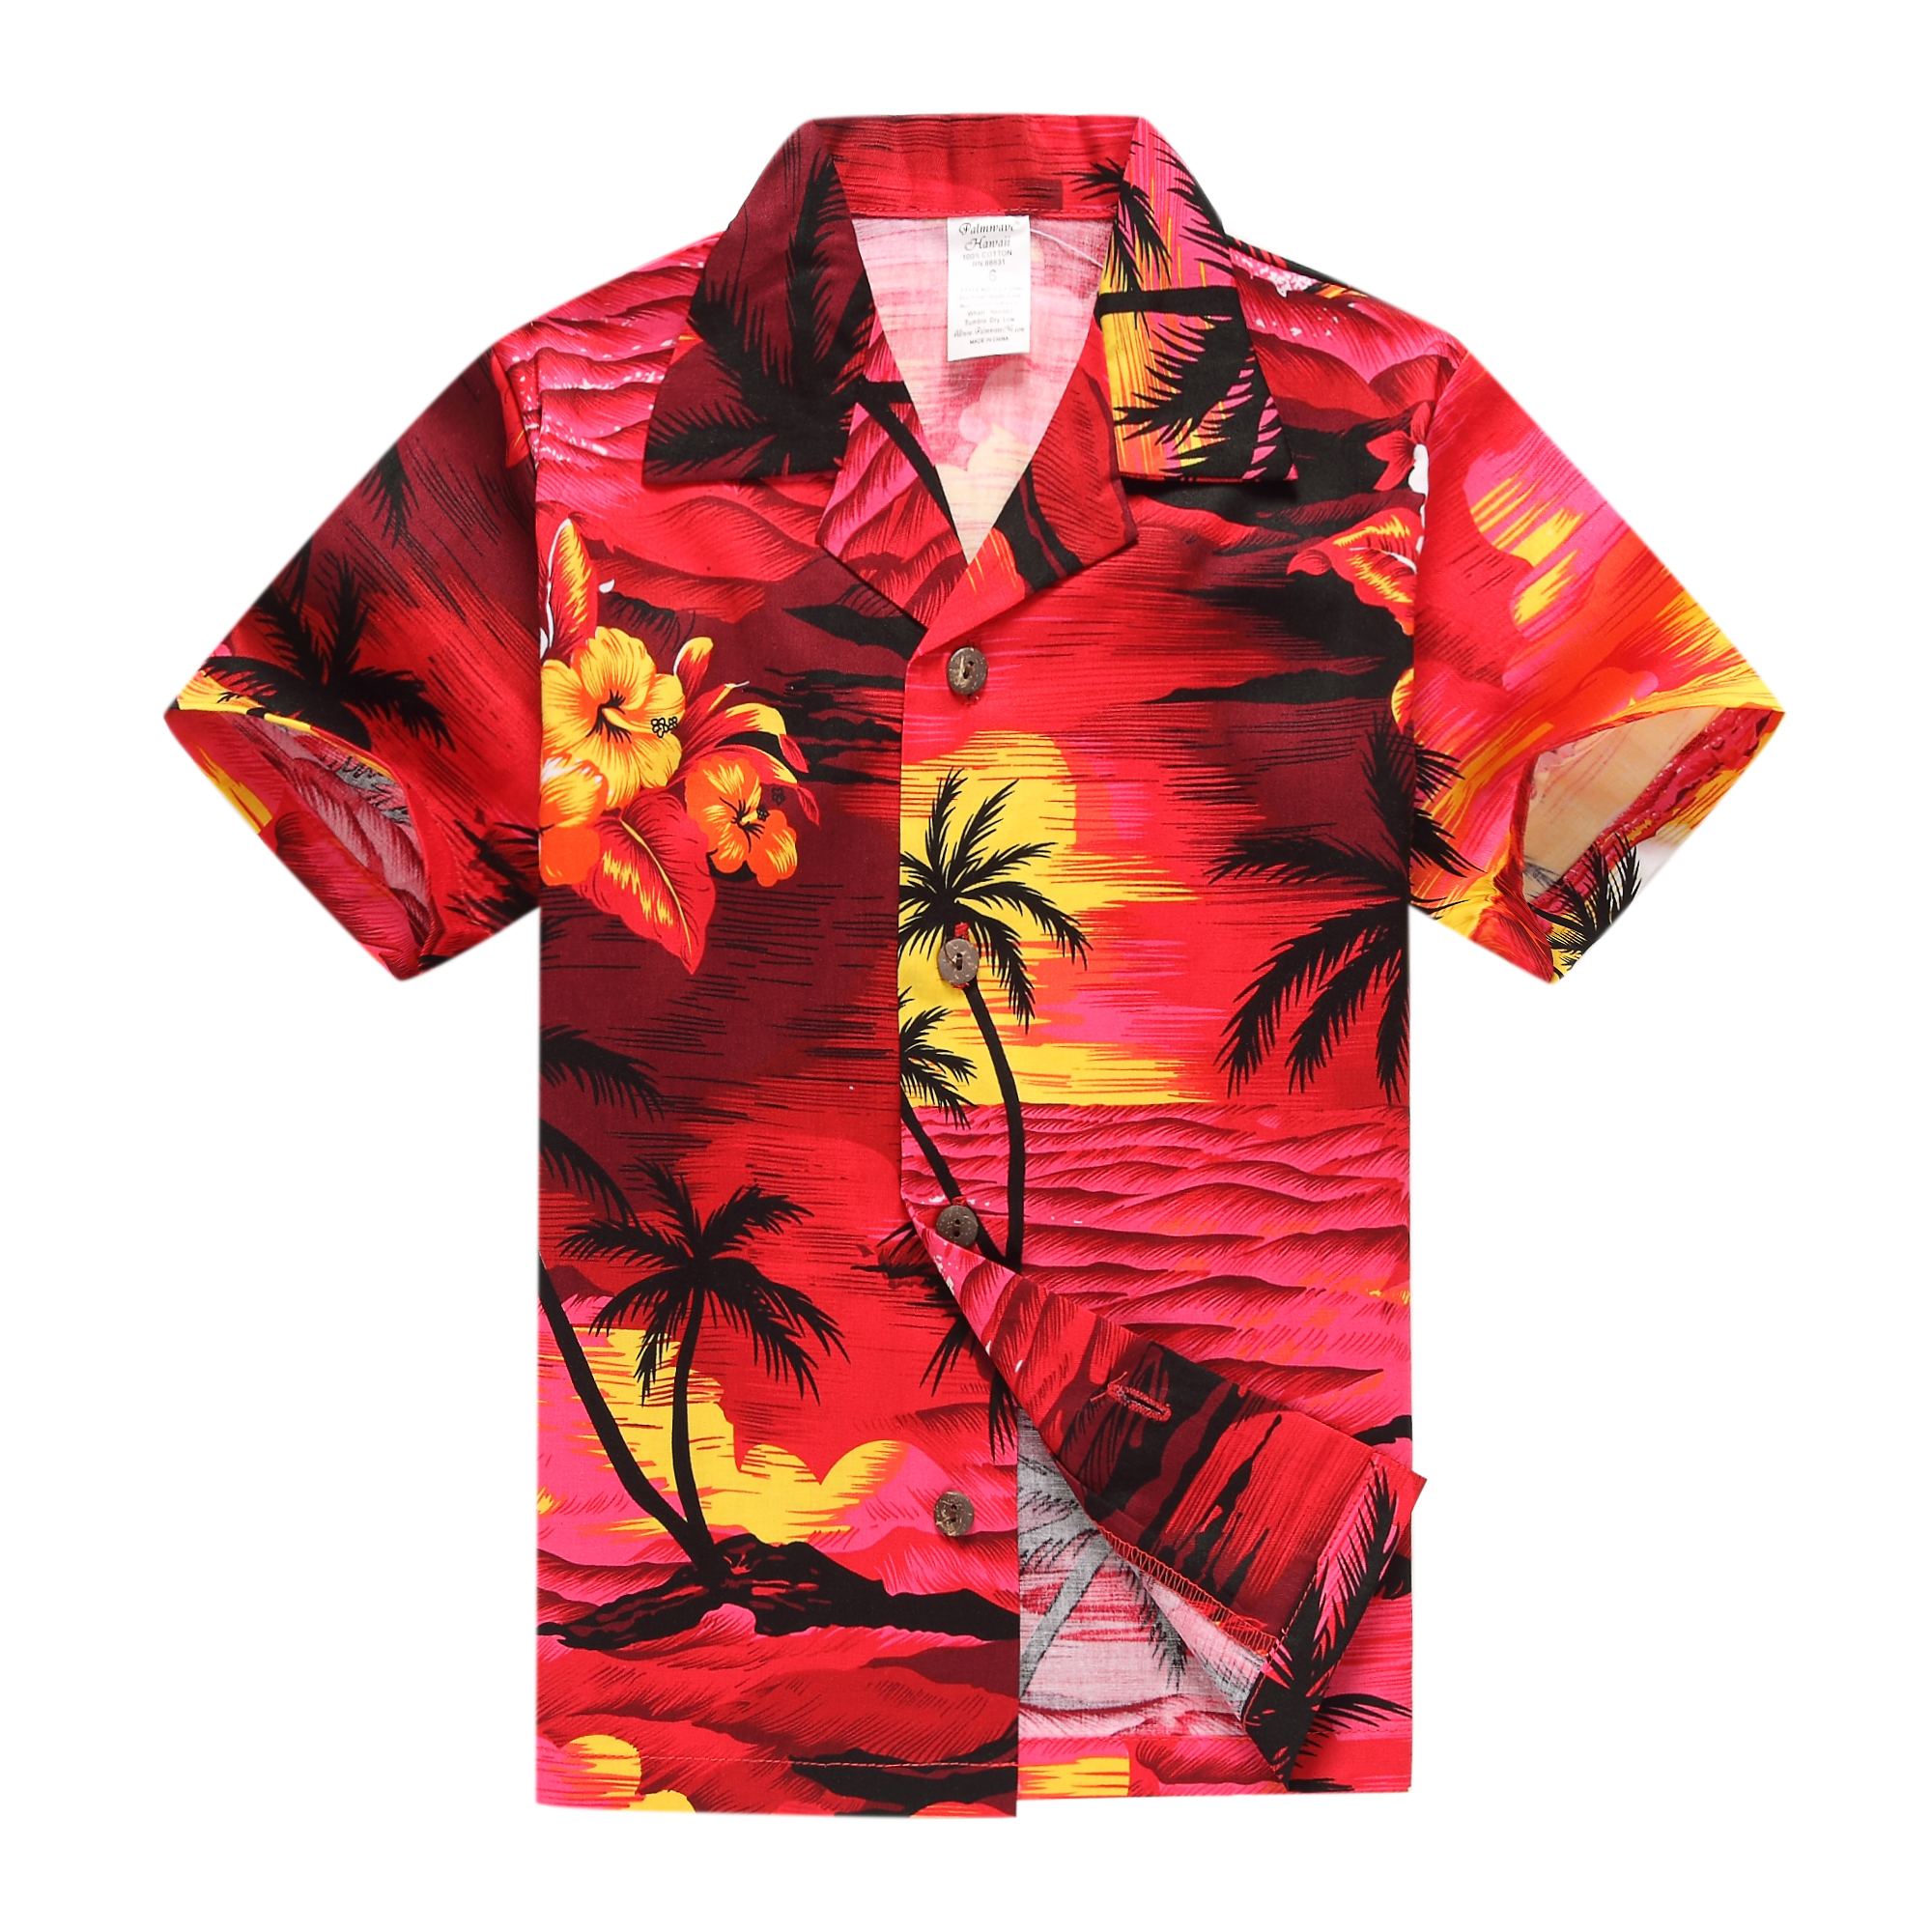 Boy Young Adult Aloha Shirt Beach Hawaii Cruise Luau